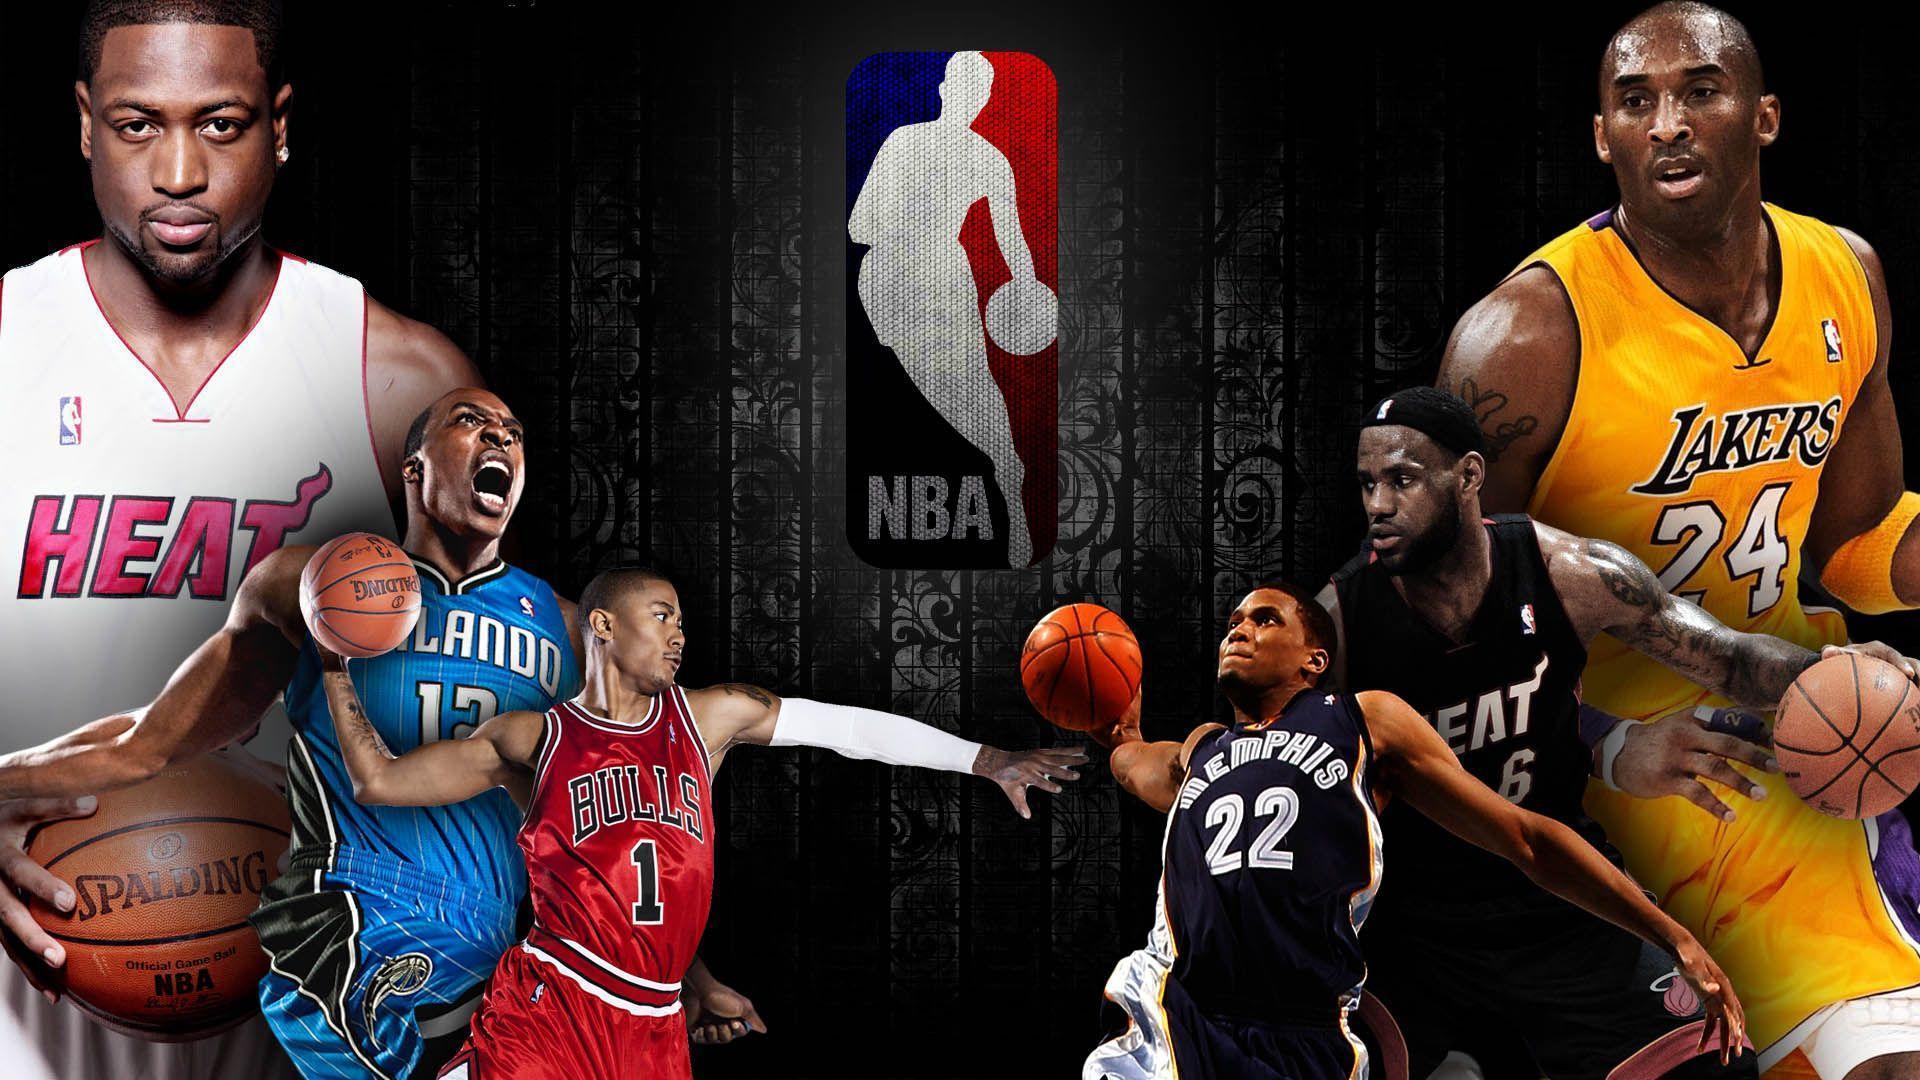 NBA Players HD 16 9